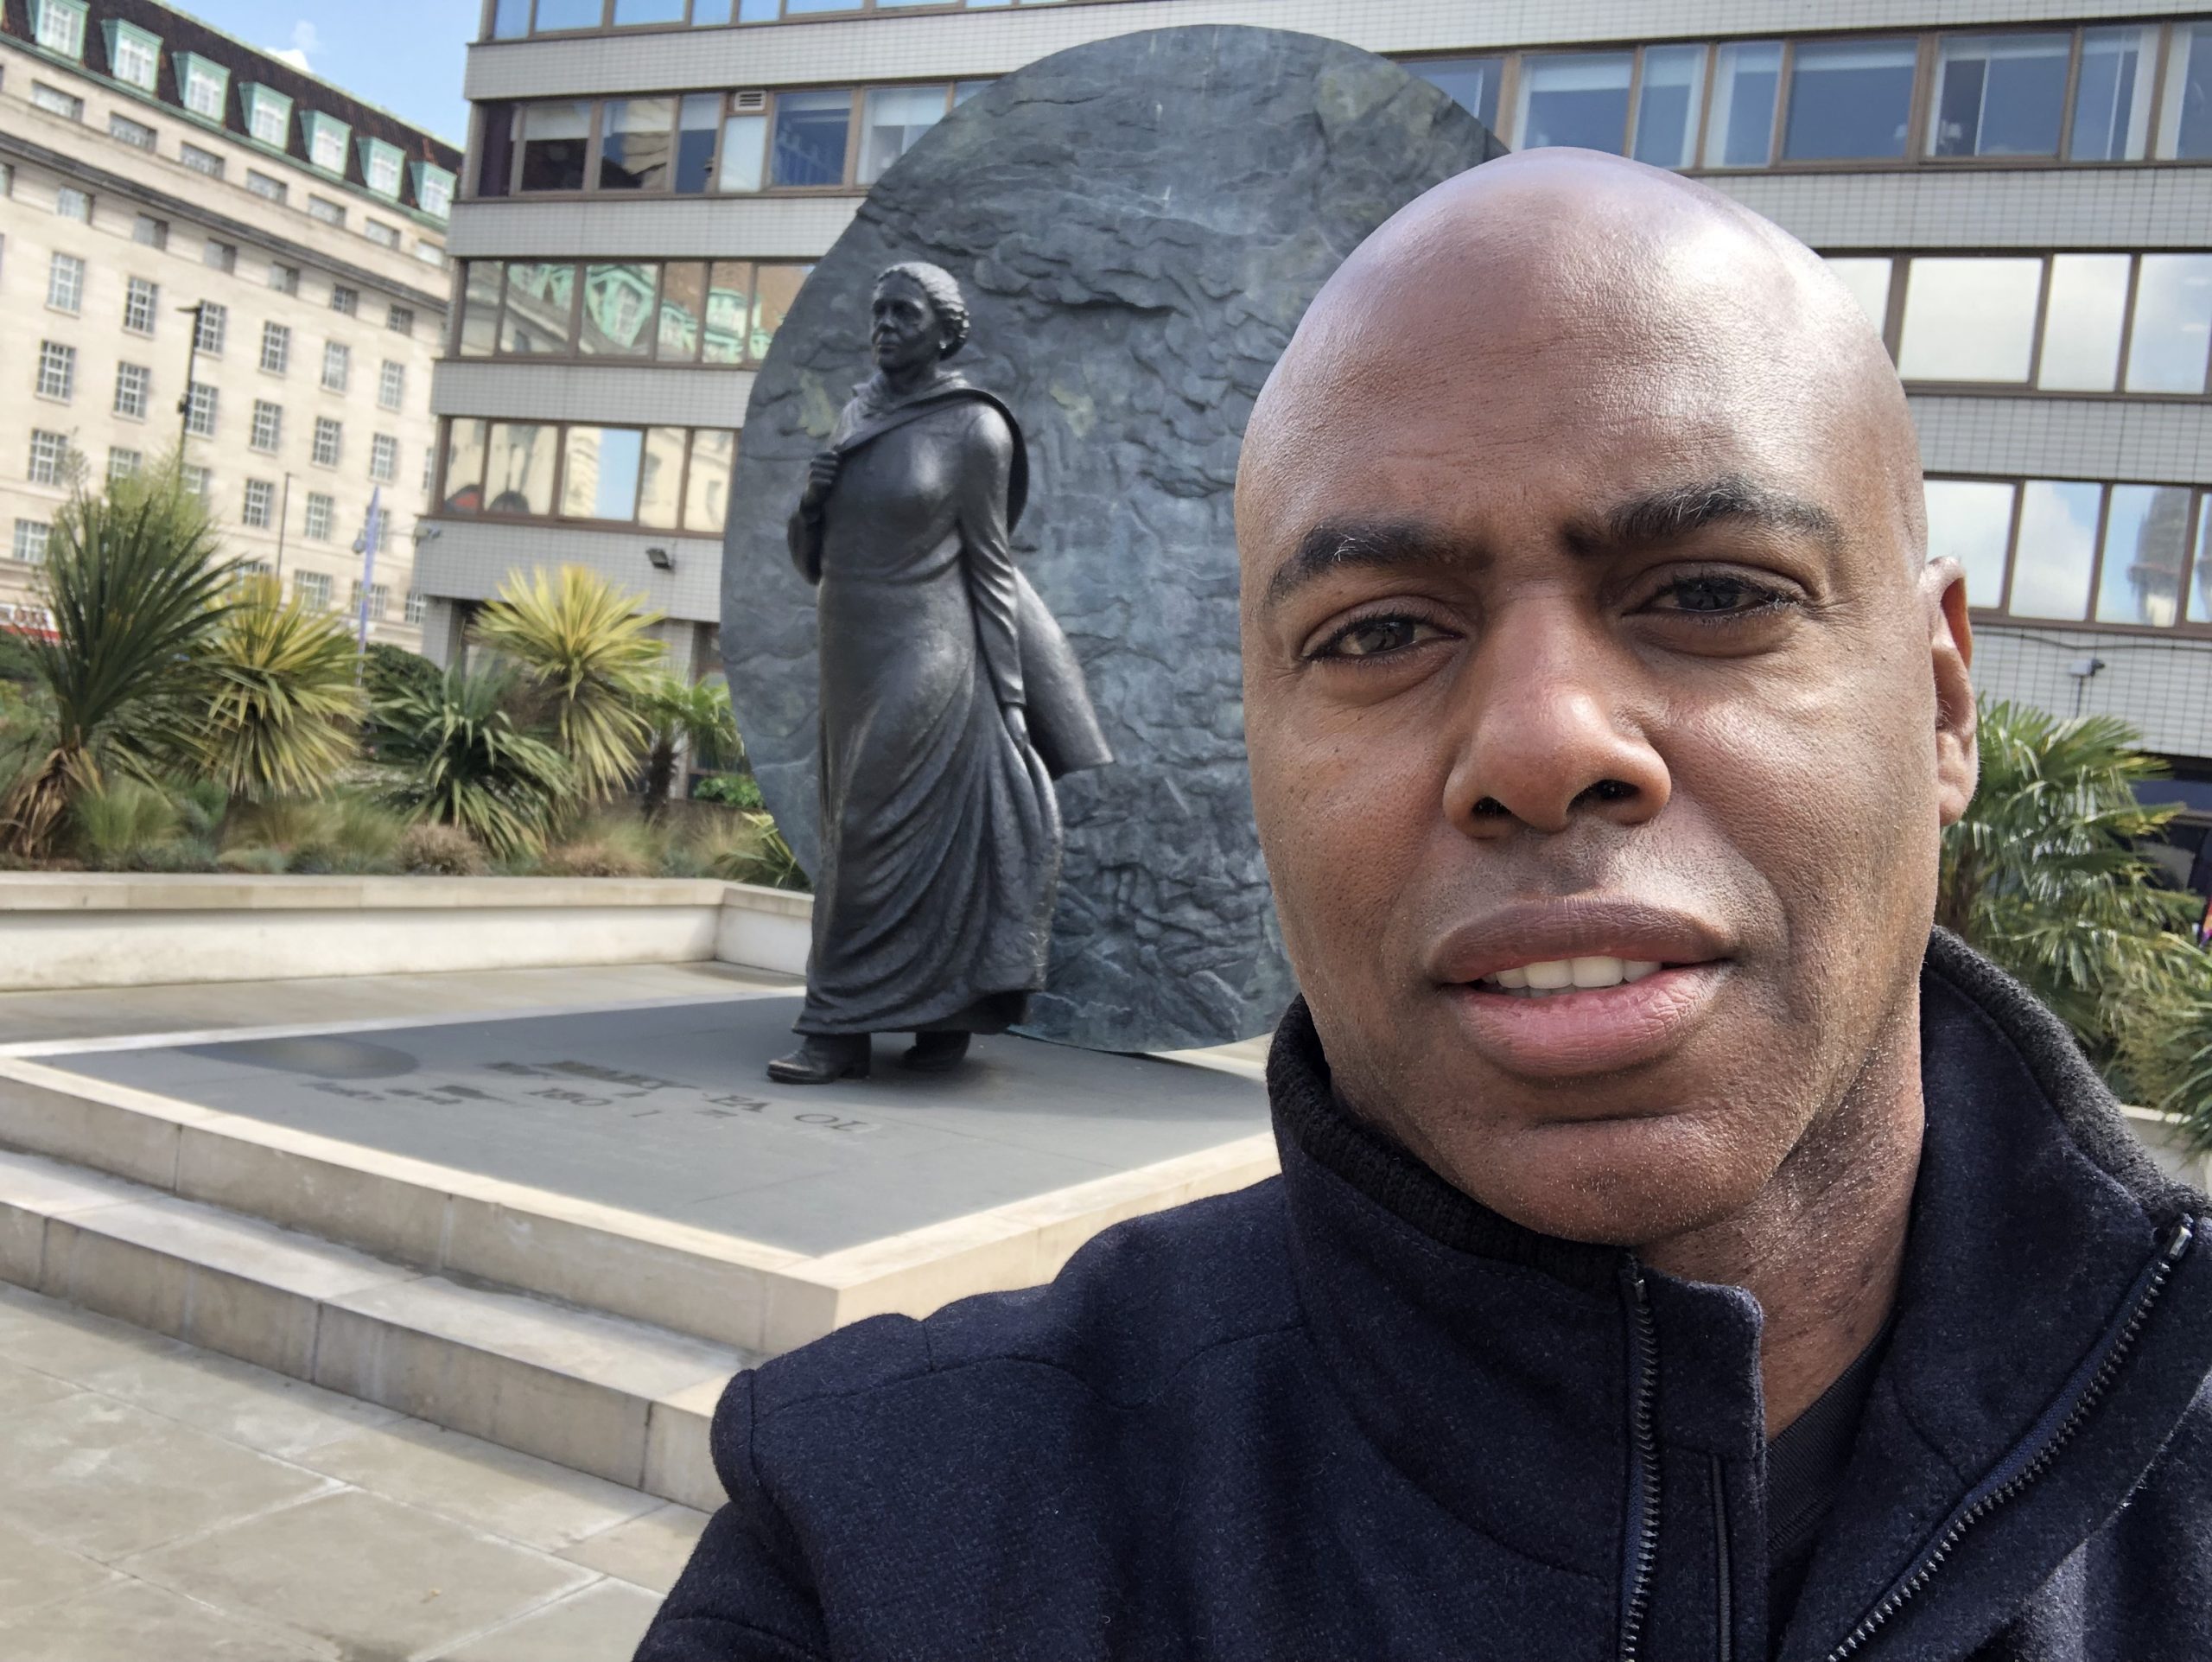 Mary Seacole Statue, The London Landmark Hiding in Plain Sight